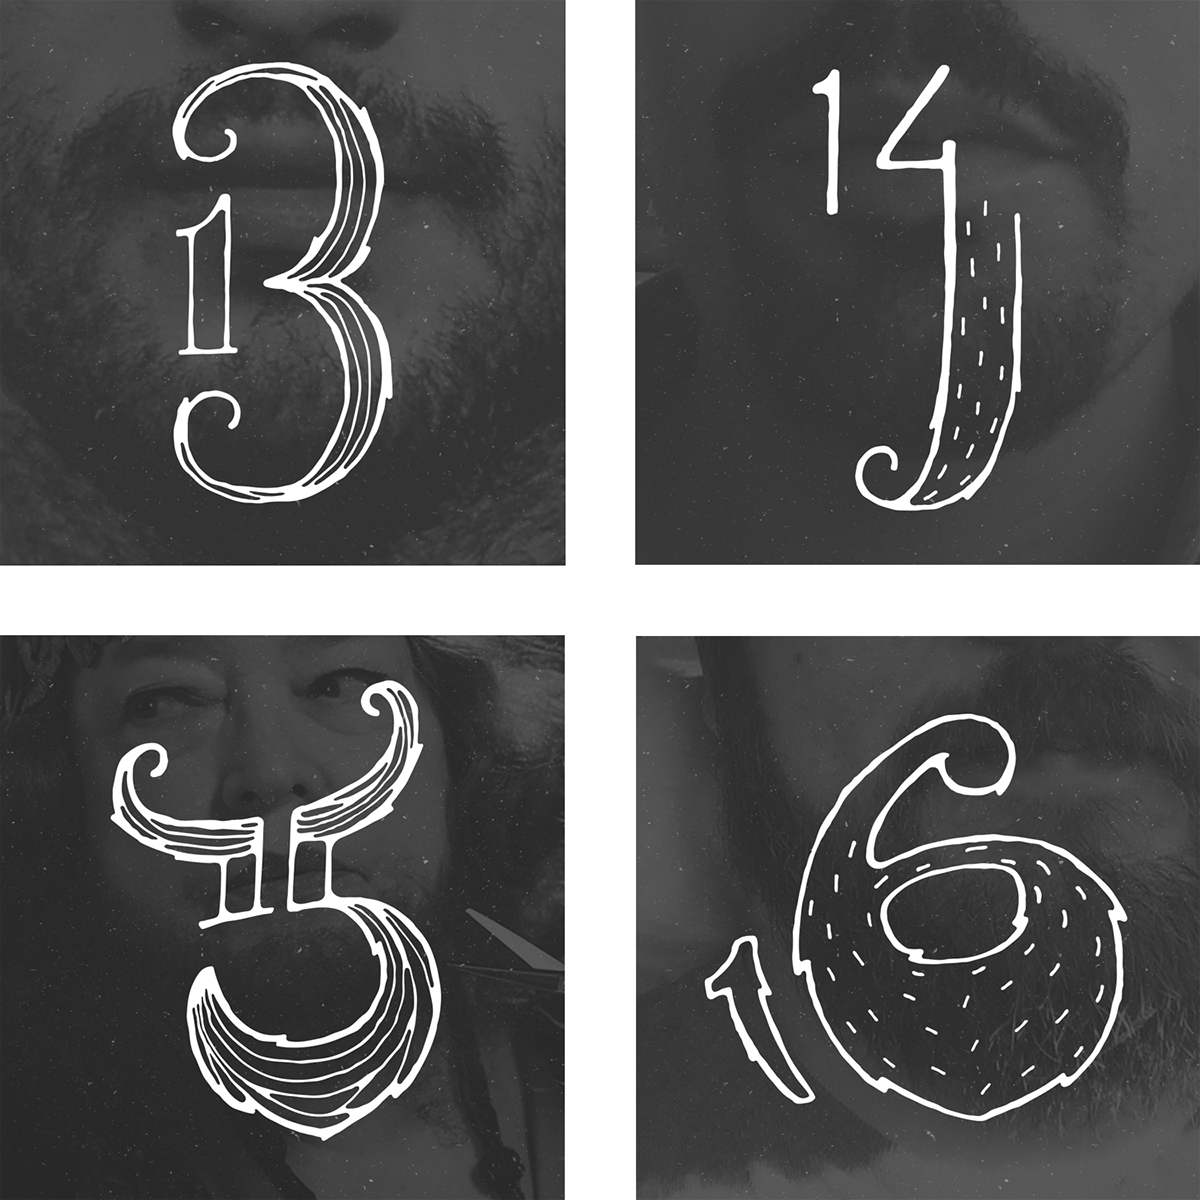 Numerals numbers type customtype lettering CustomNumbers handmade font beards mustache beard November Noshavenovember Movember instagram